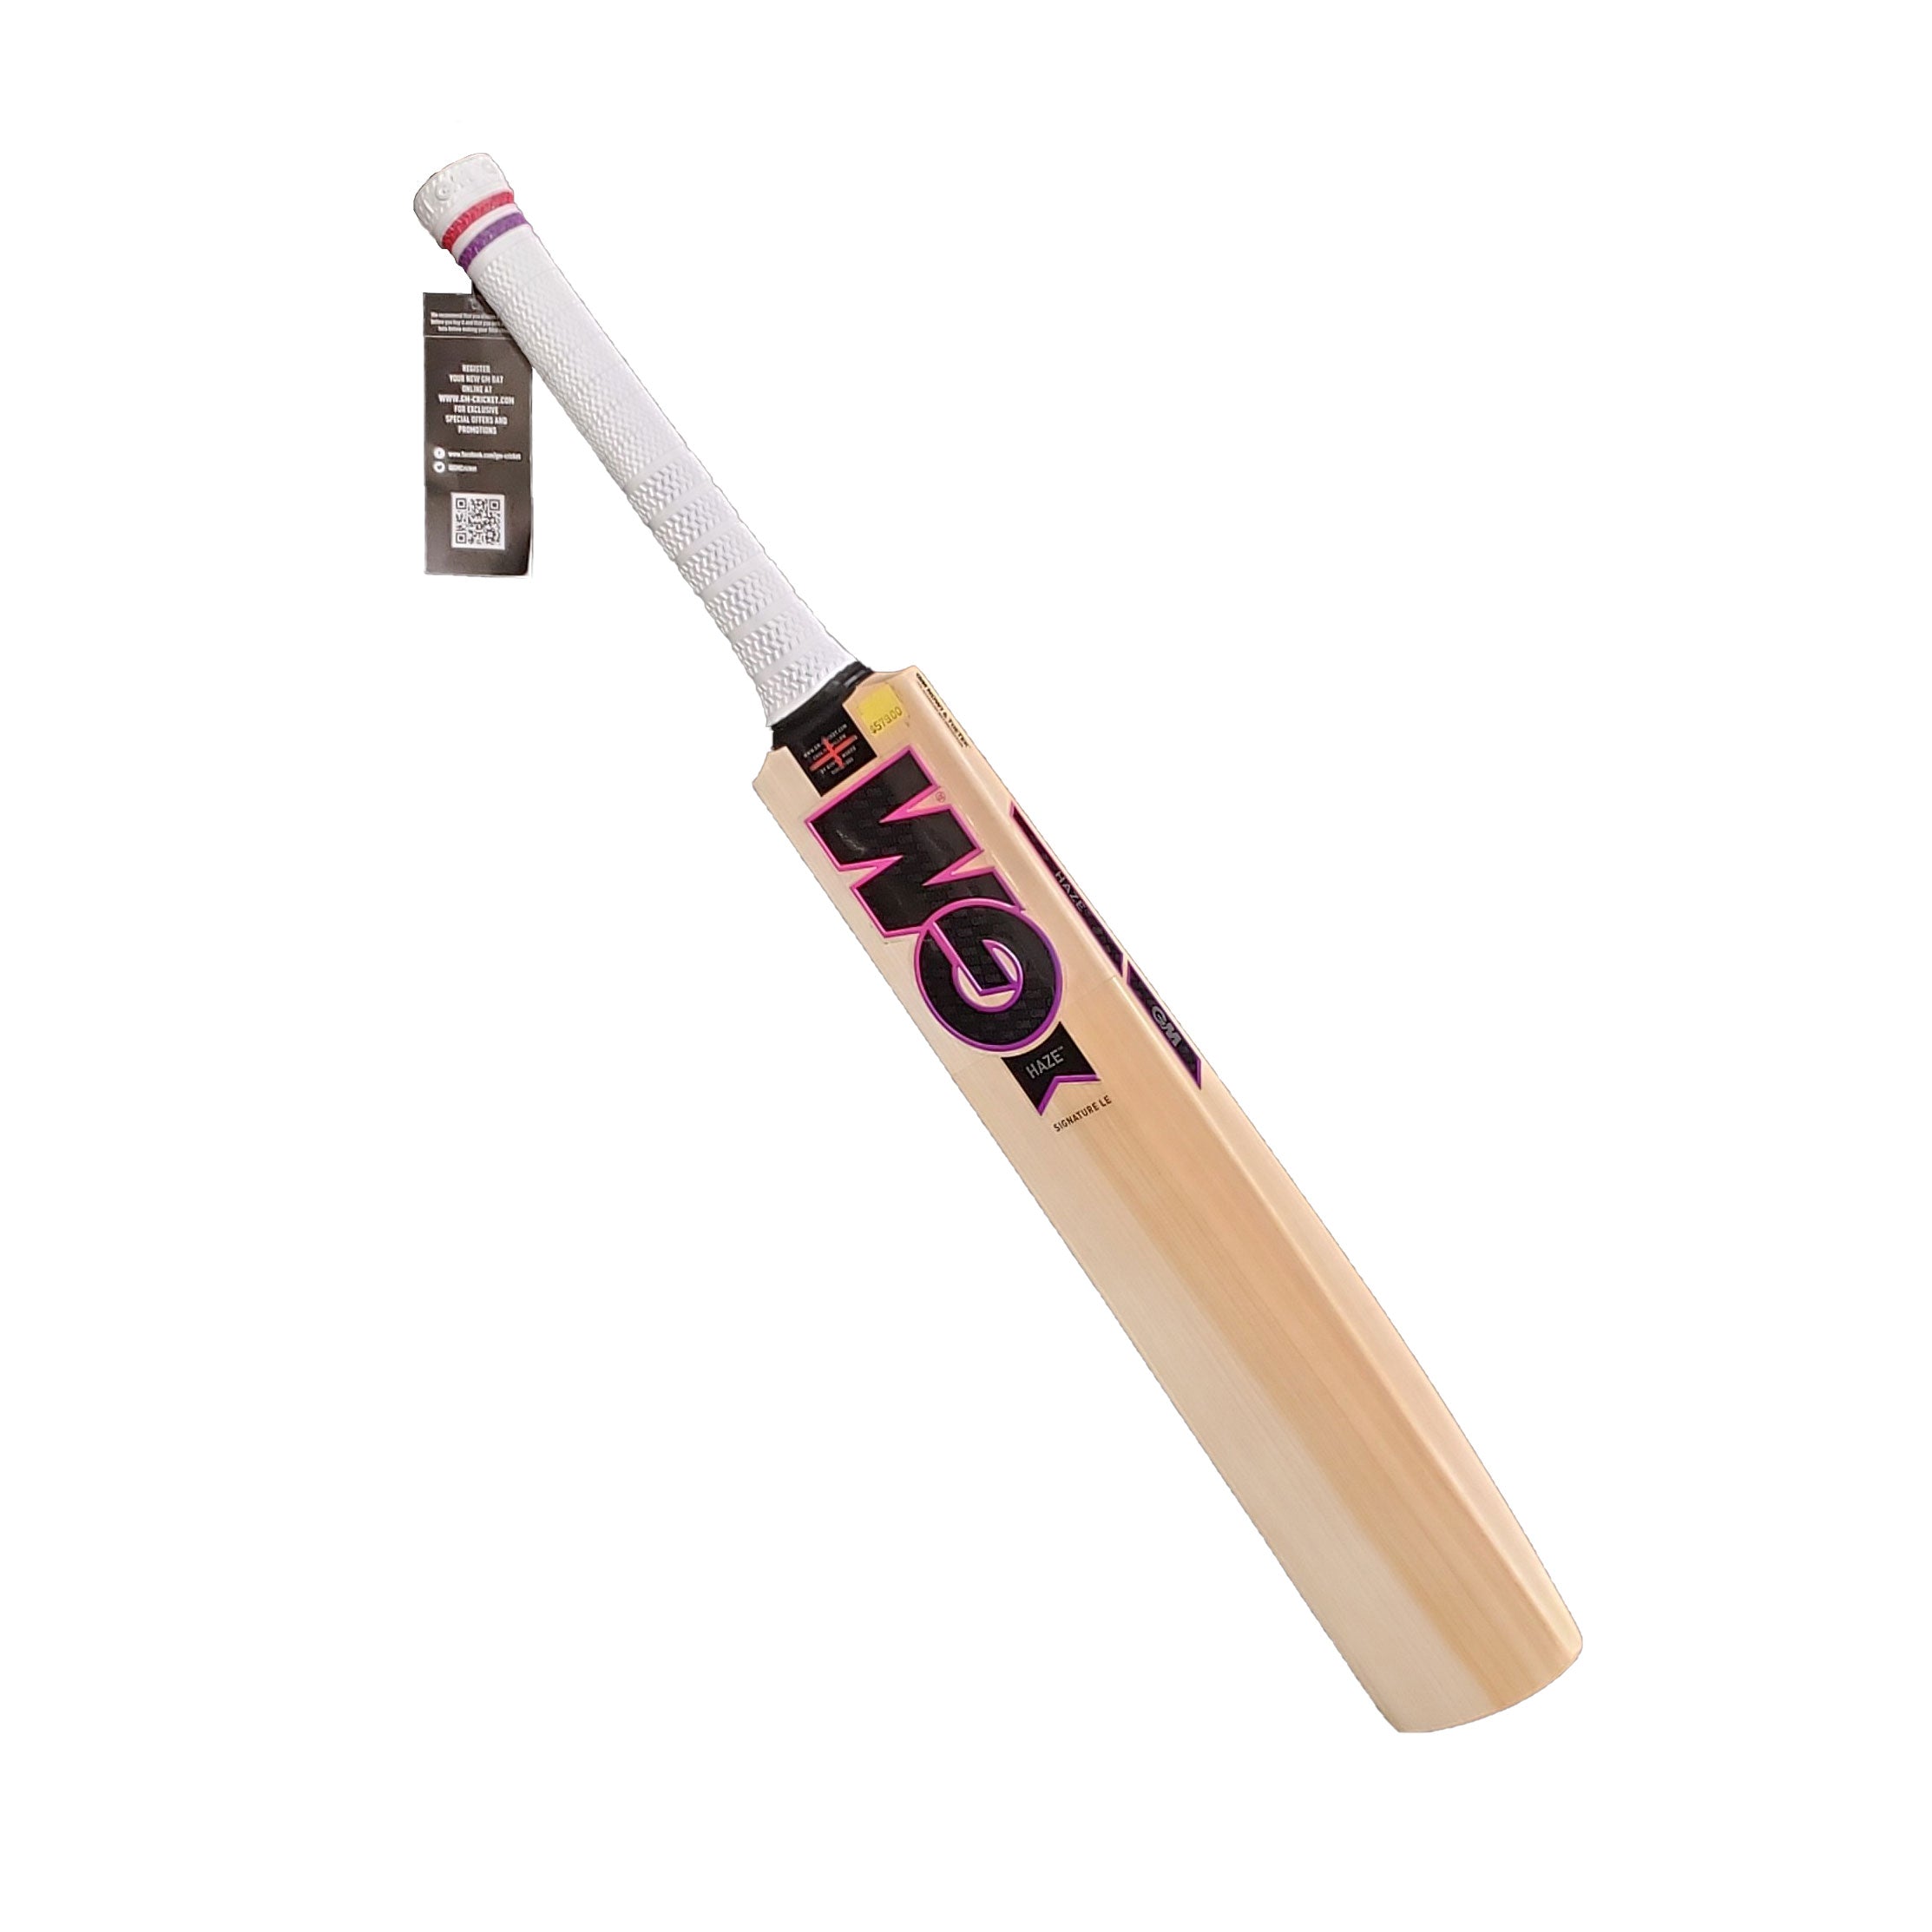 GM Cricket Bat Haze Signature Limited Edition Premium Bat